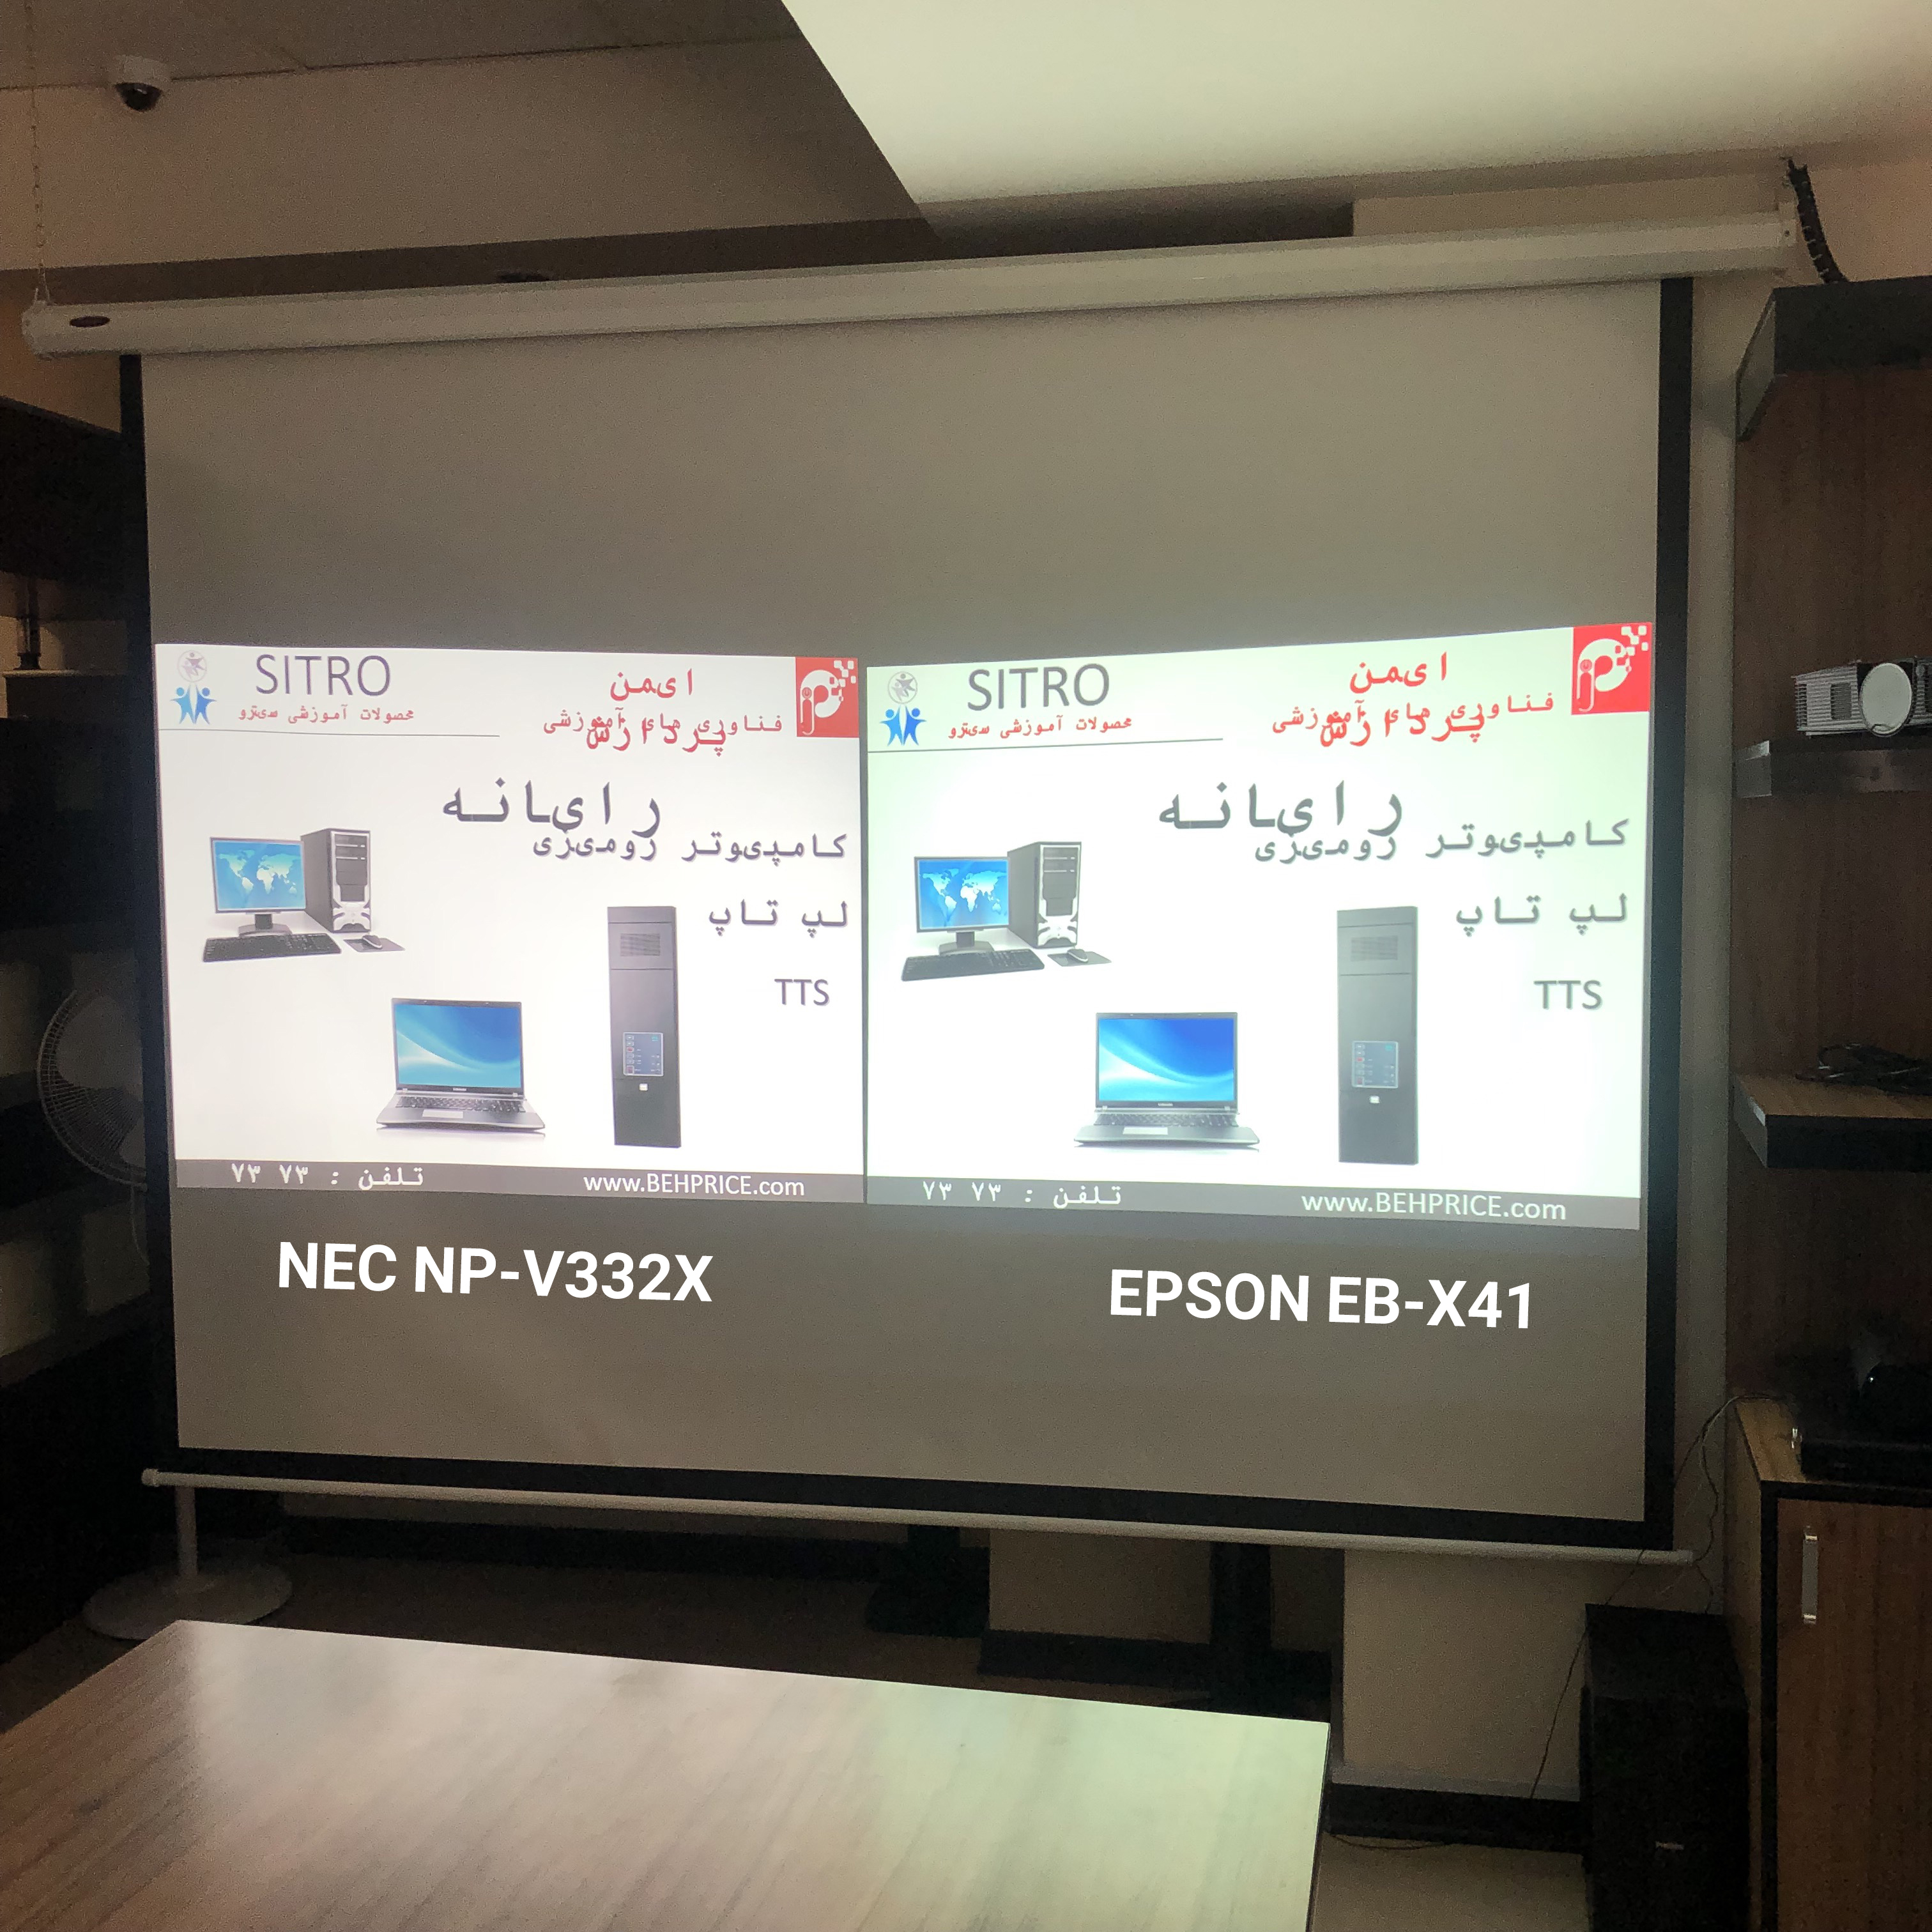 EPSON EB-X41 VS NEC NP-V332X